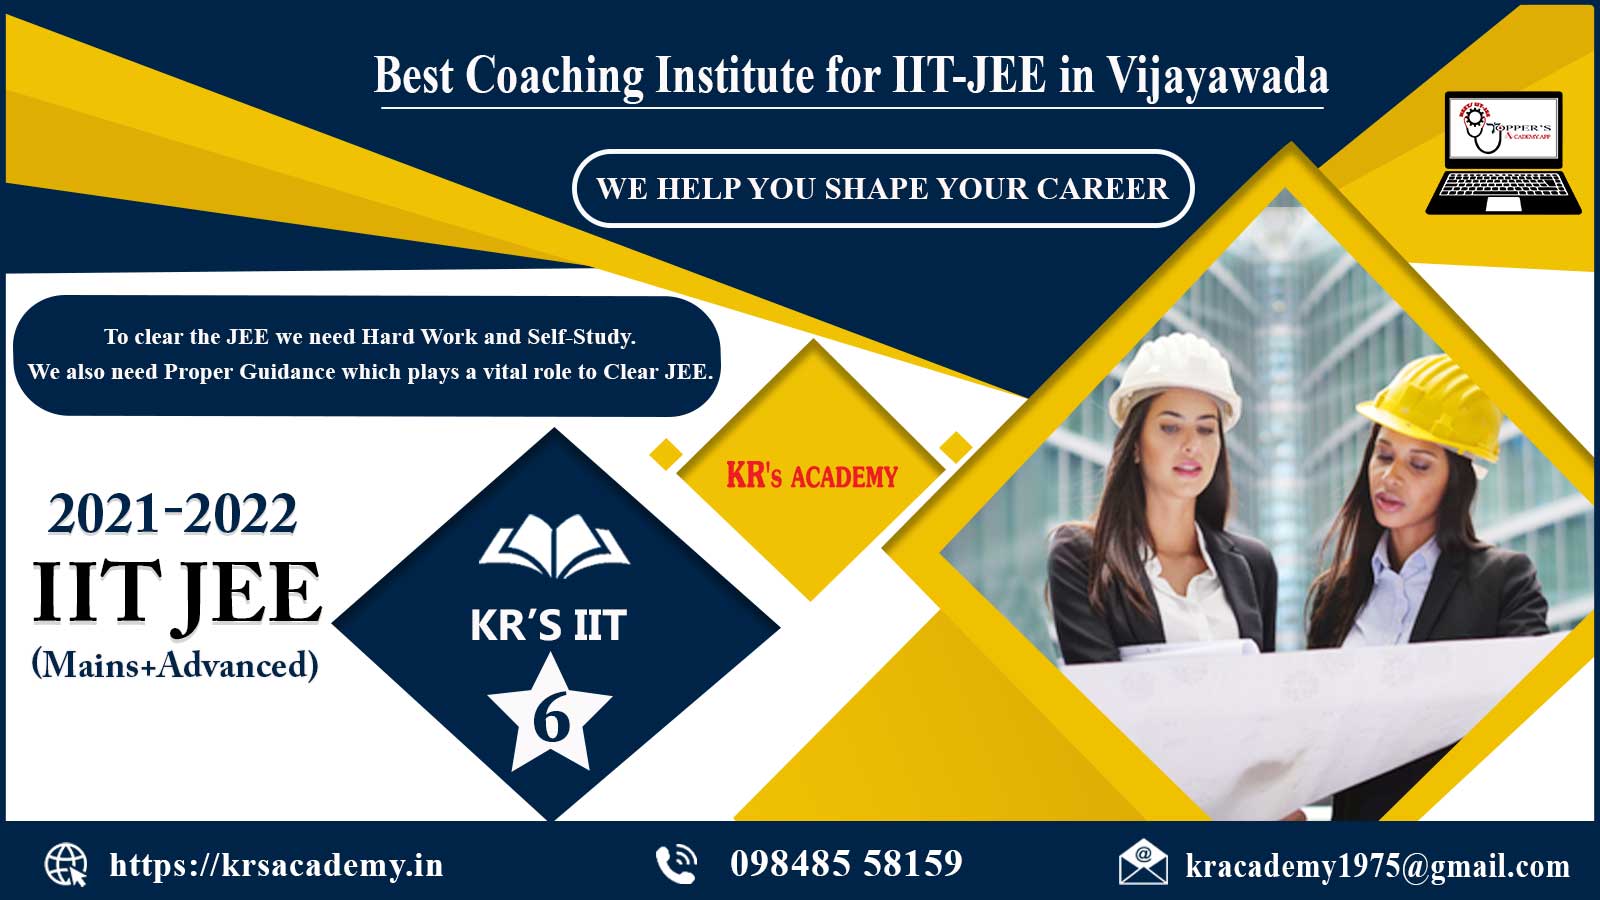 KR’s IIT JEE Academy in Vijayawada